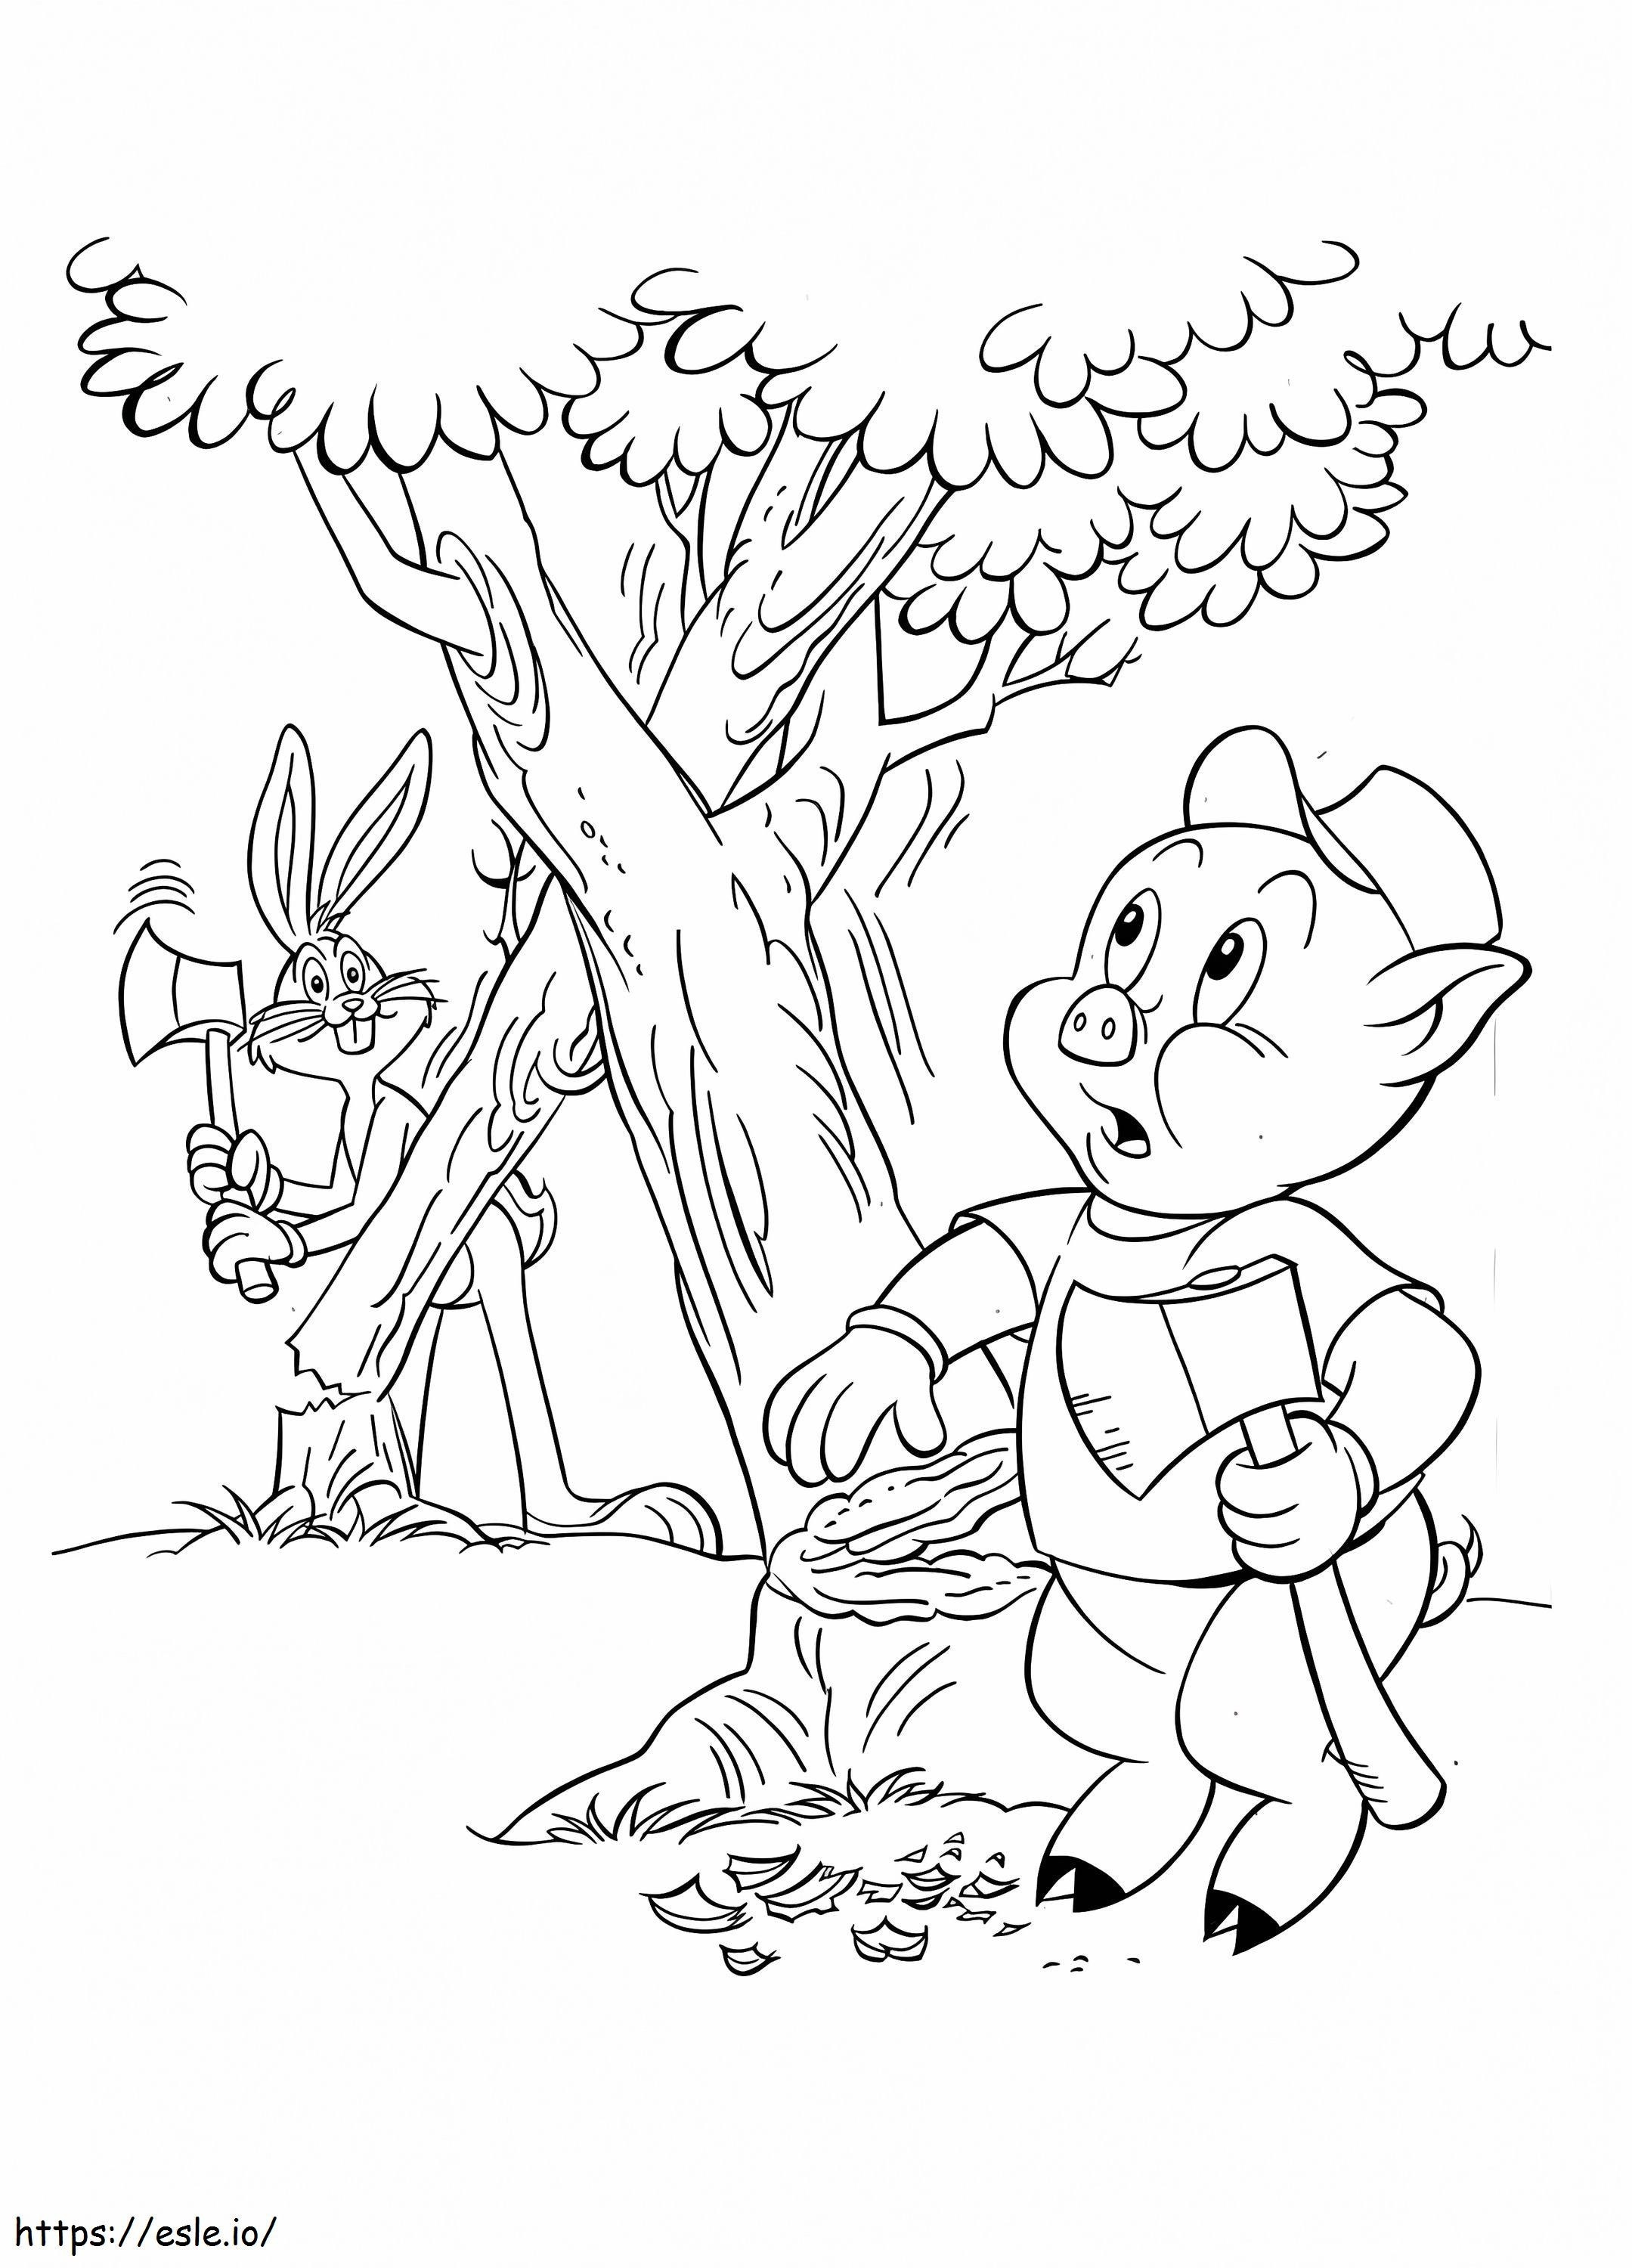 Coloriage Porky Pig et Bugs Bunny à imprimer dessin